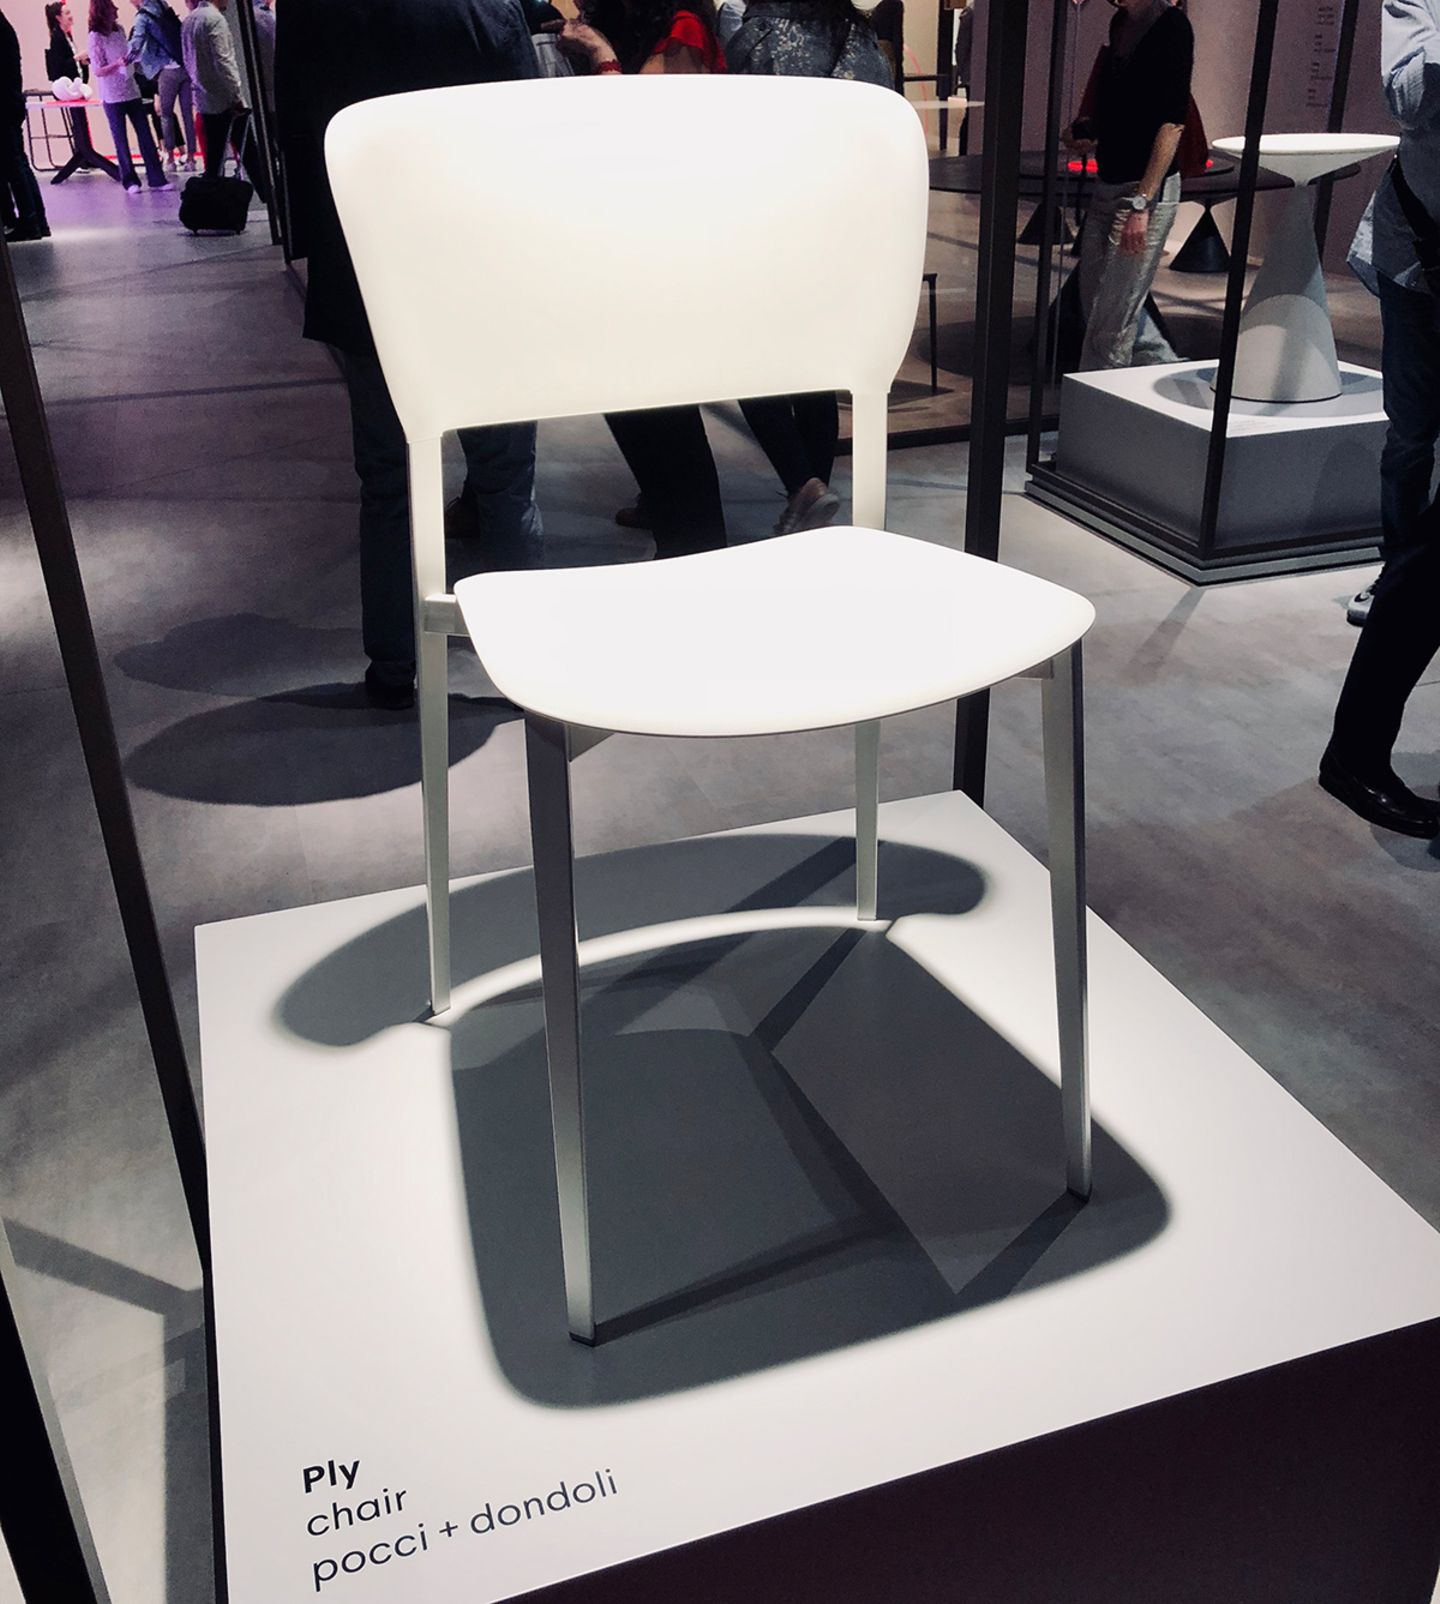 Stuhl "Ply" von Desalto